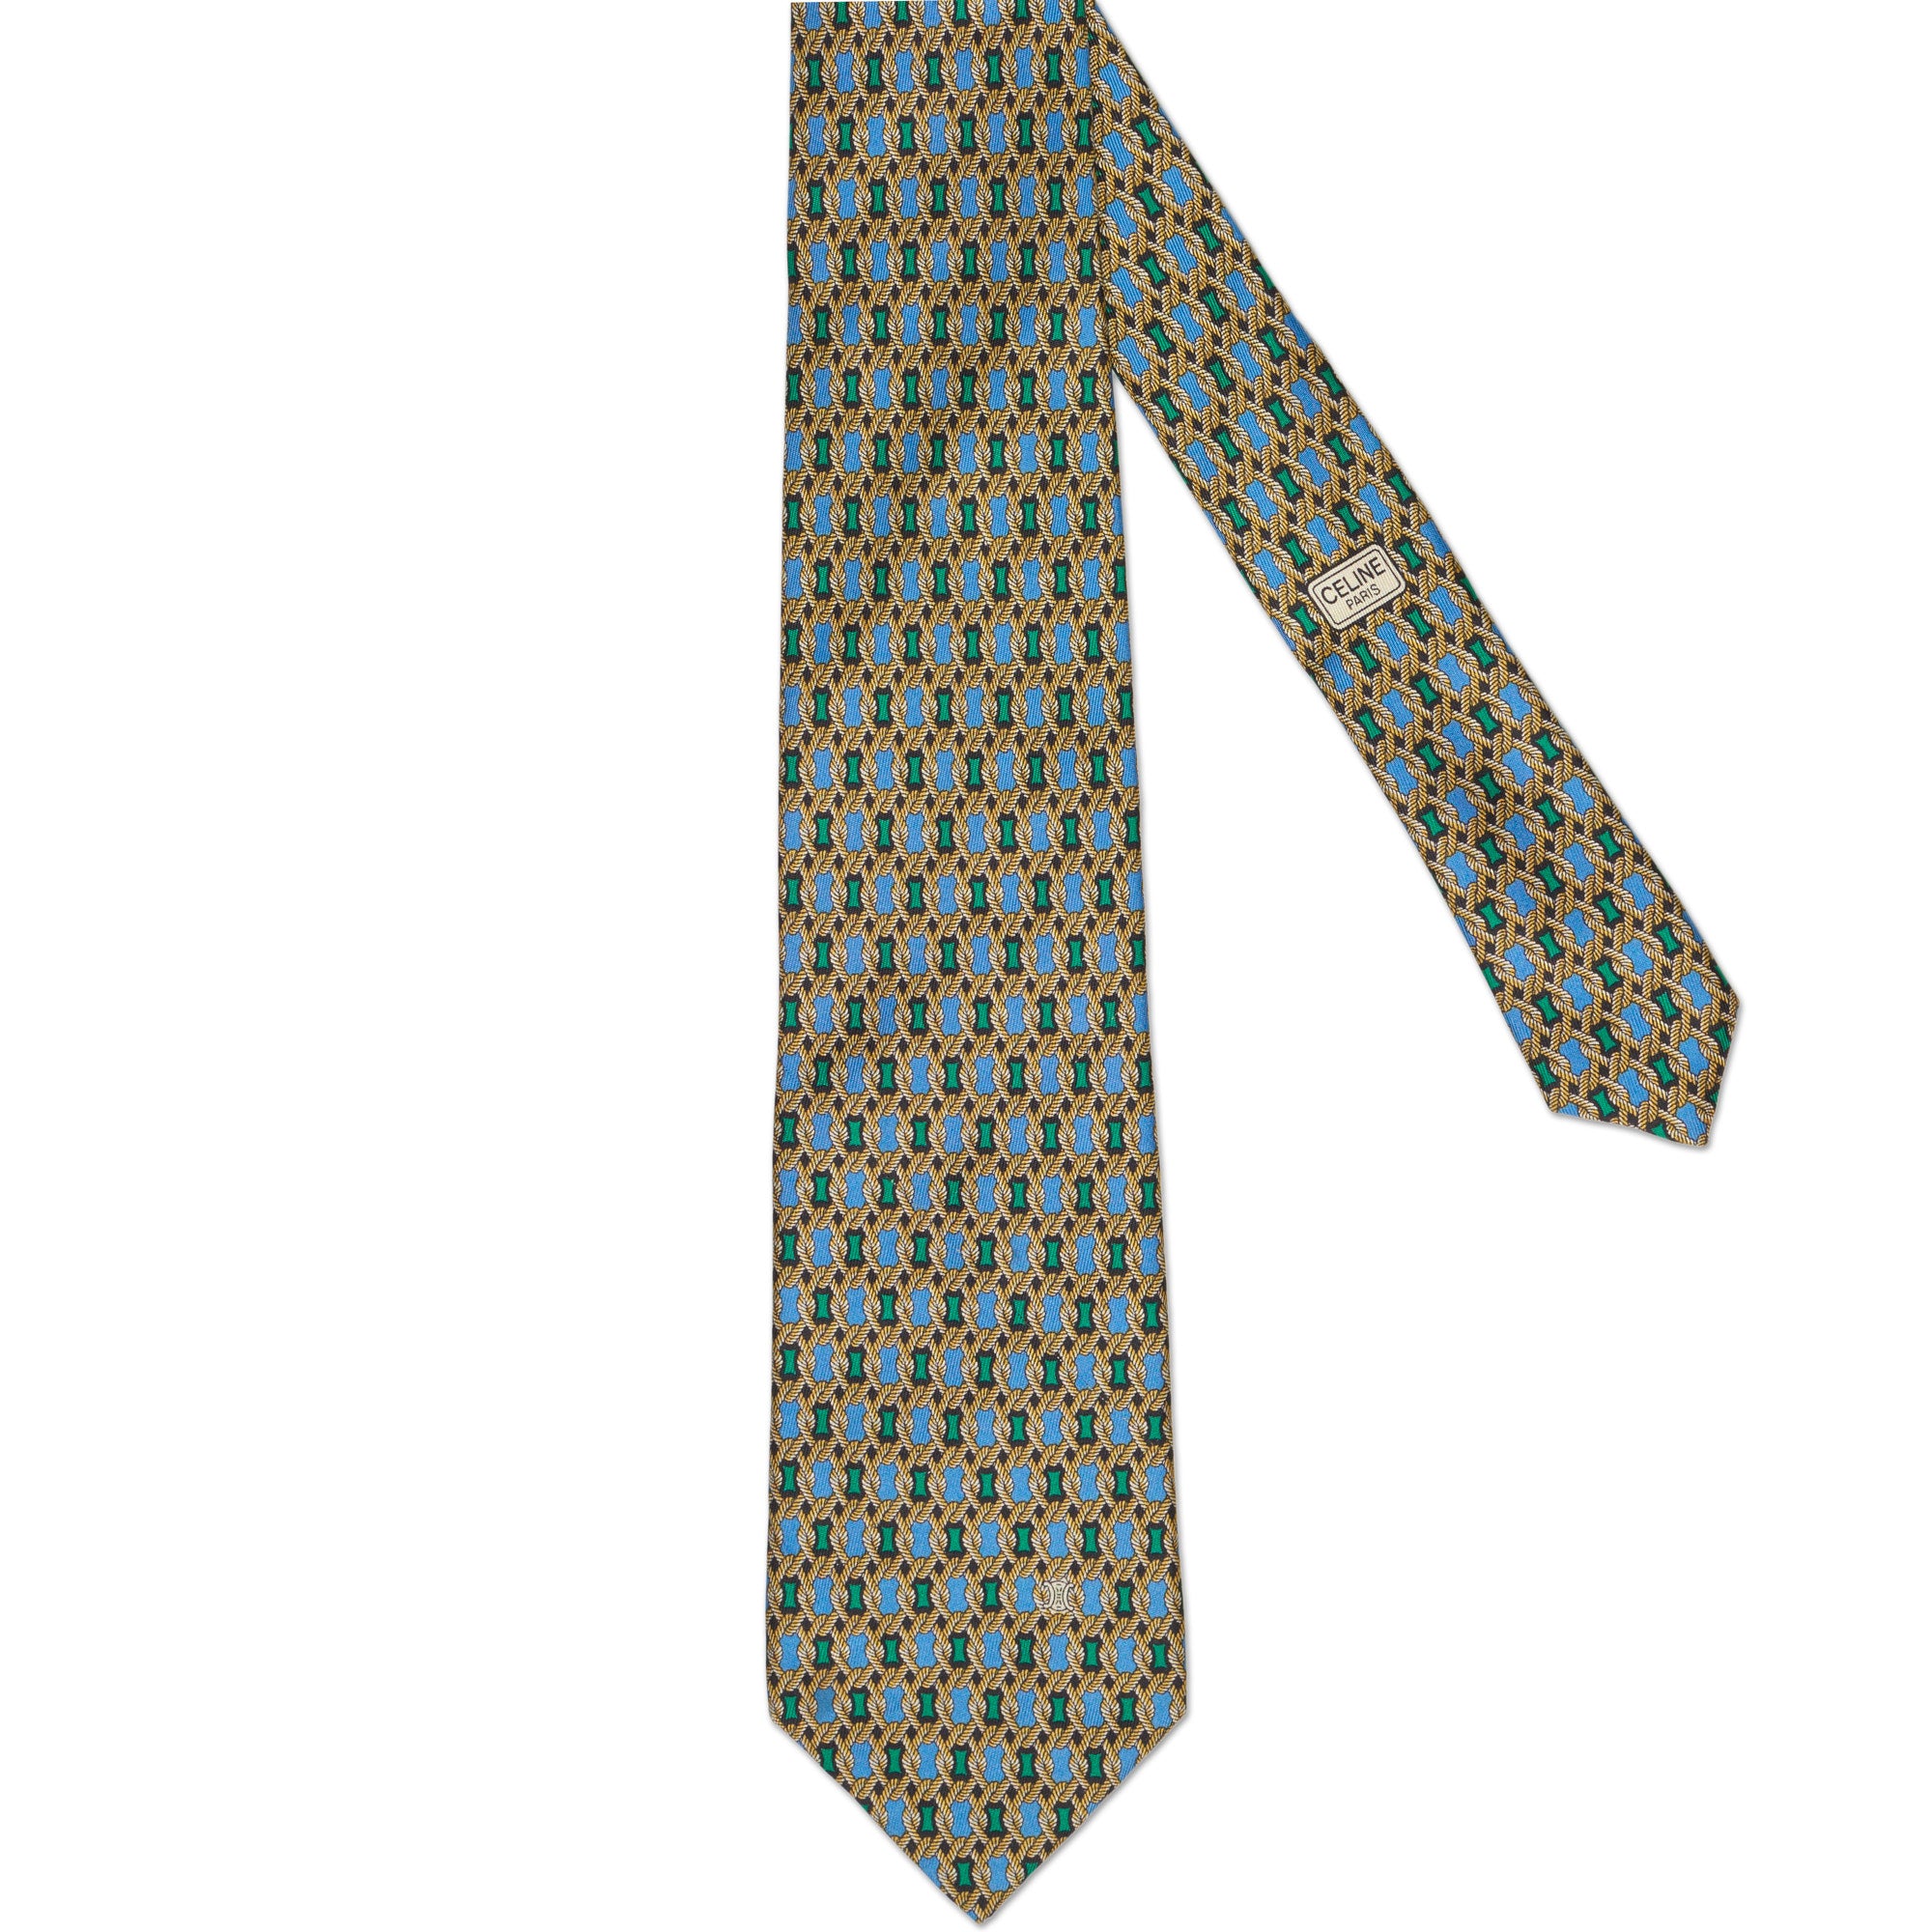 CELINE PARIS Handmade Multi-Color Woven Design Printed Silk Tie